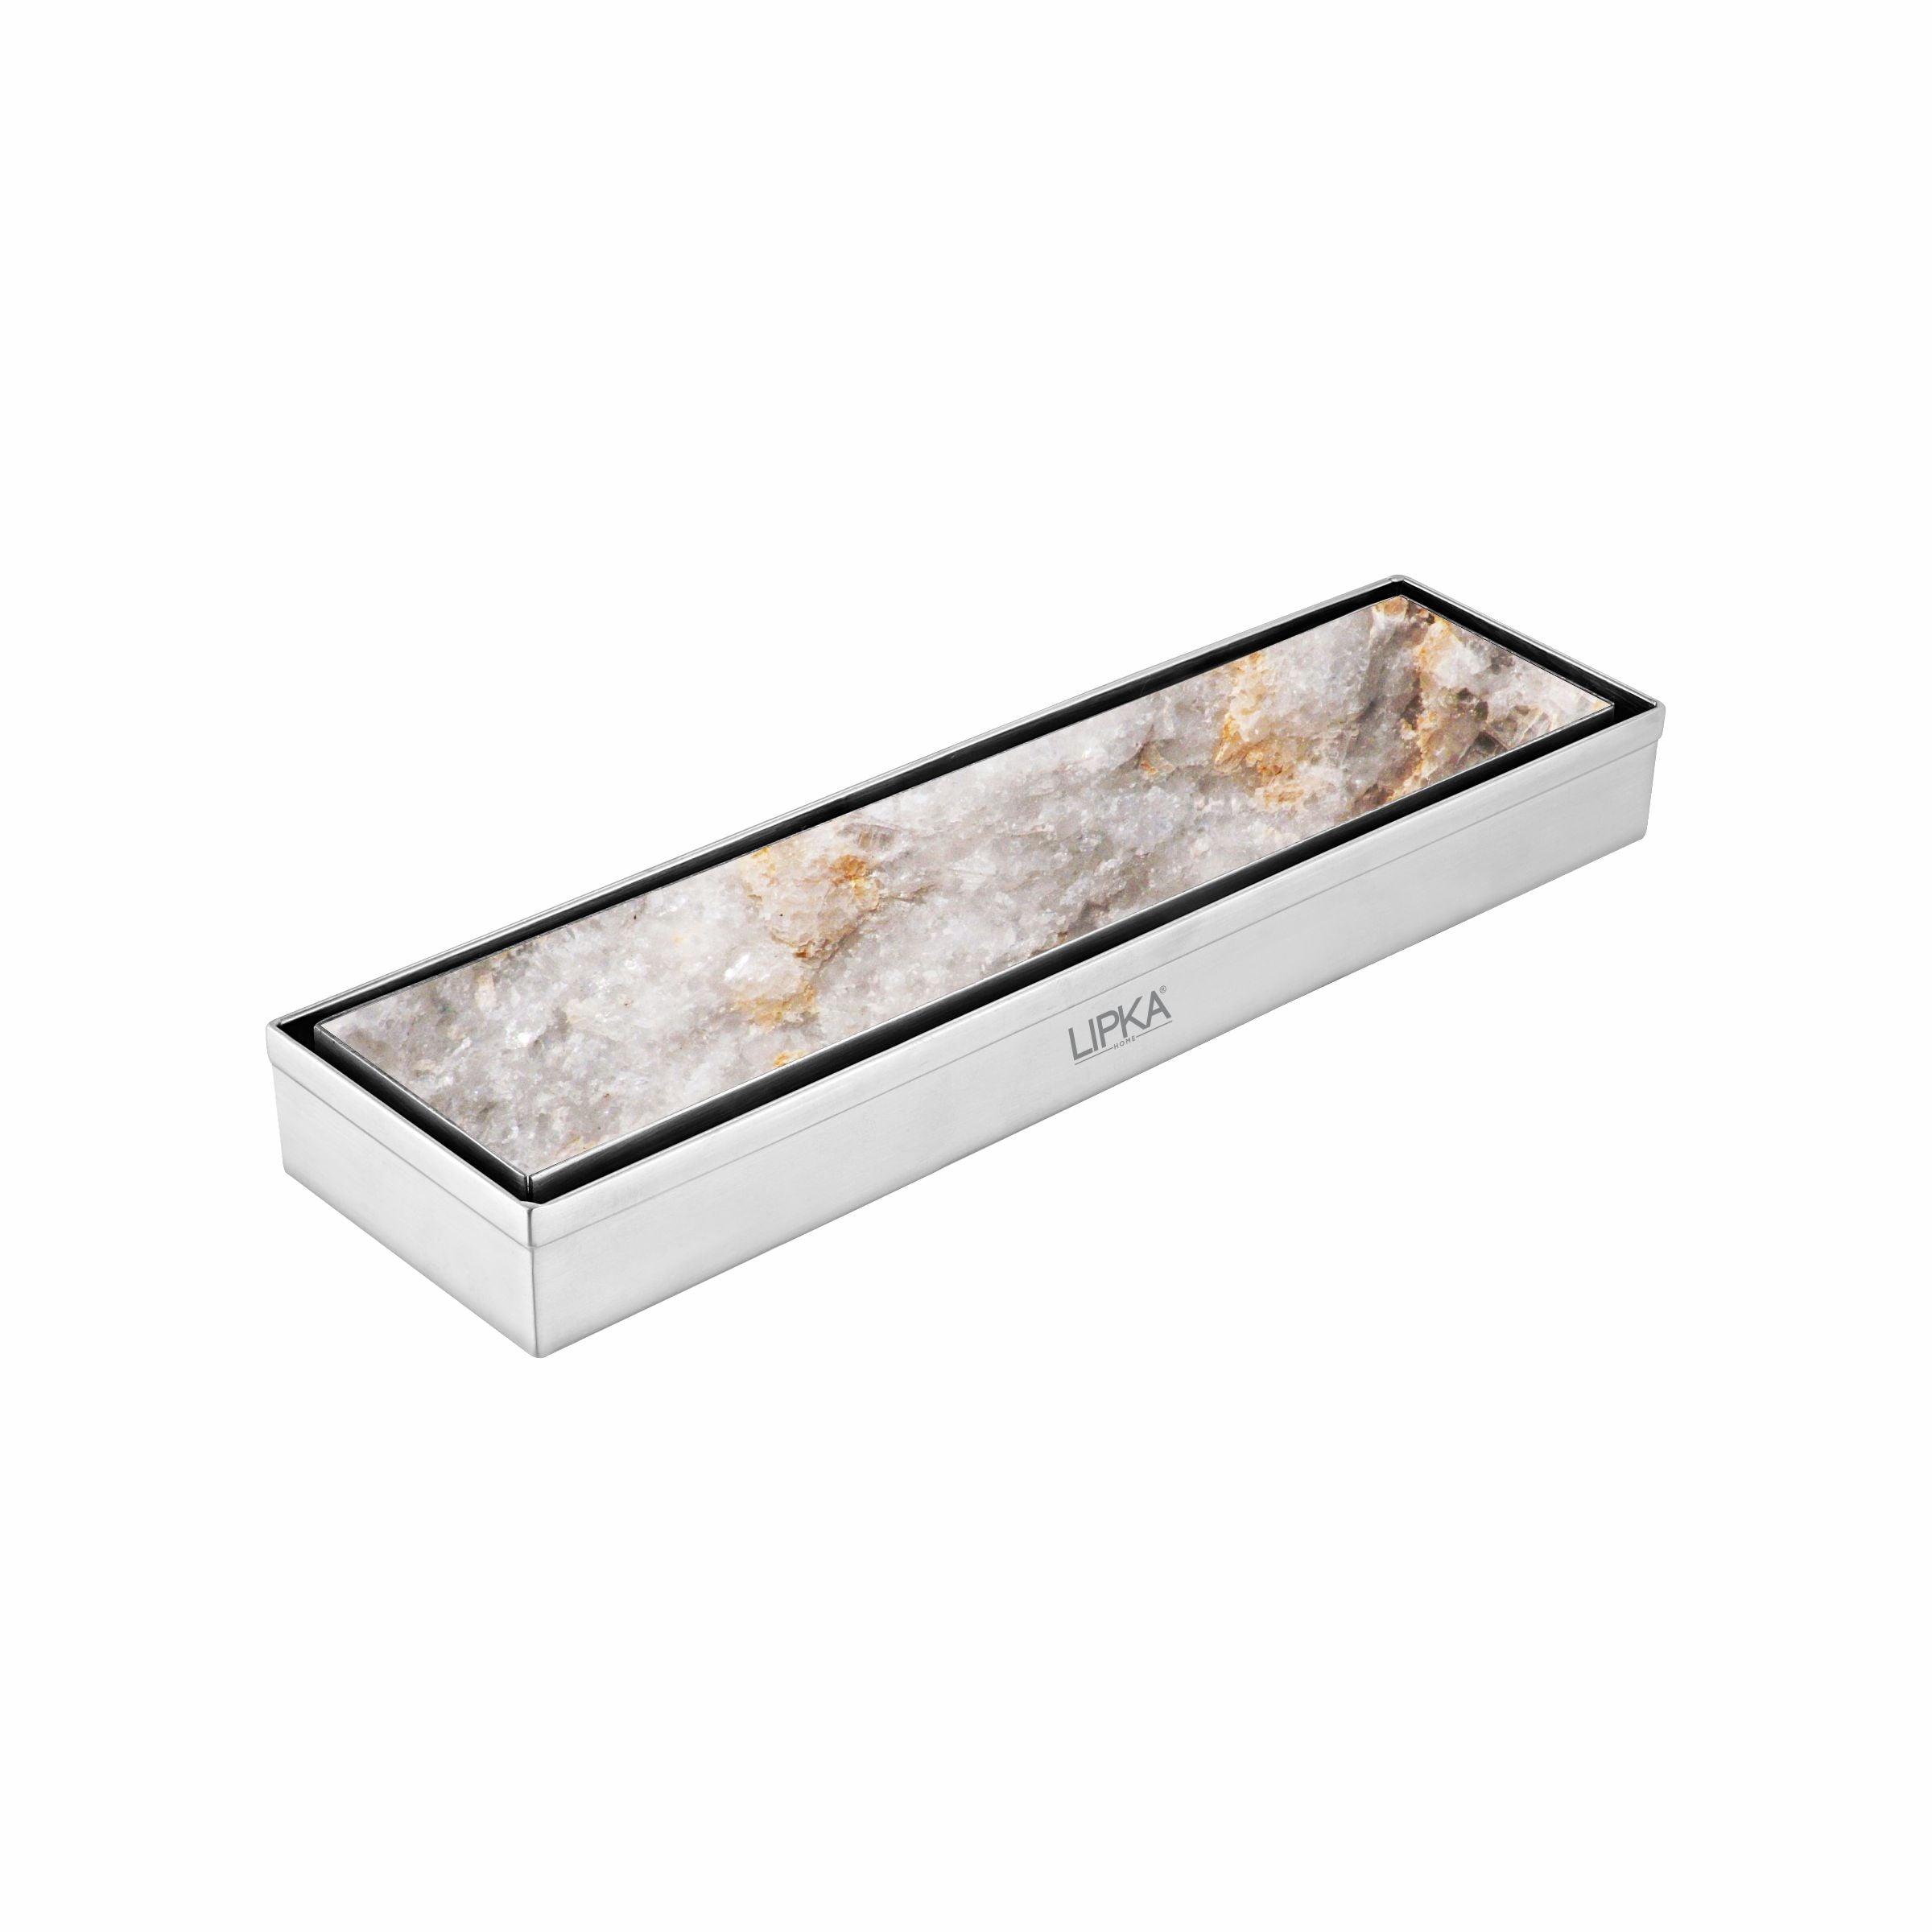 Tile Insert Shower Drain Channel (18 x 3 Inches) - LIPKA